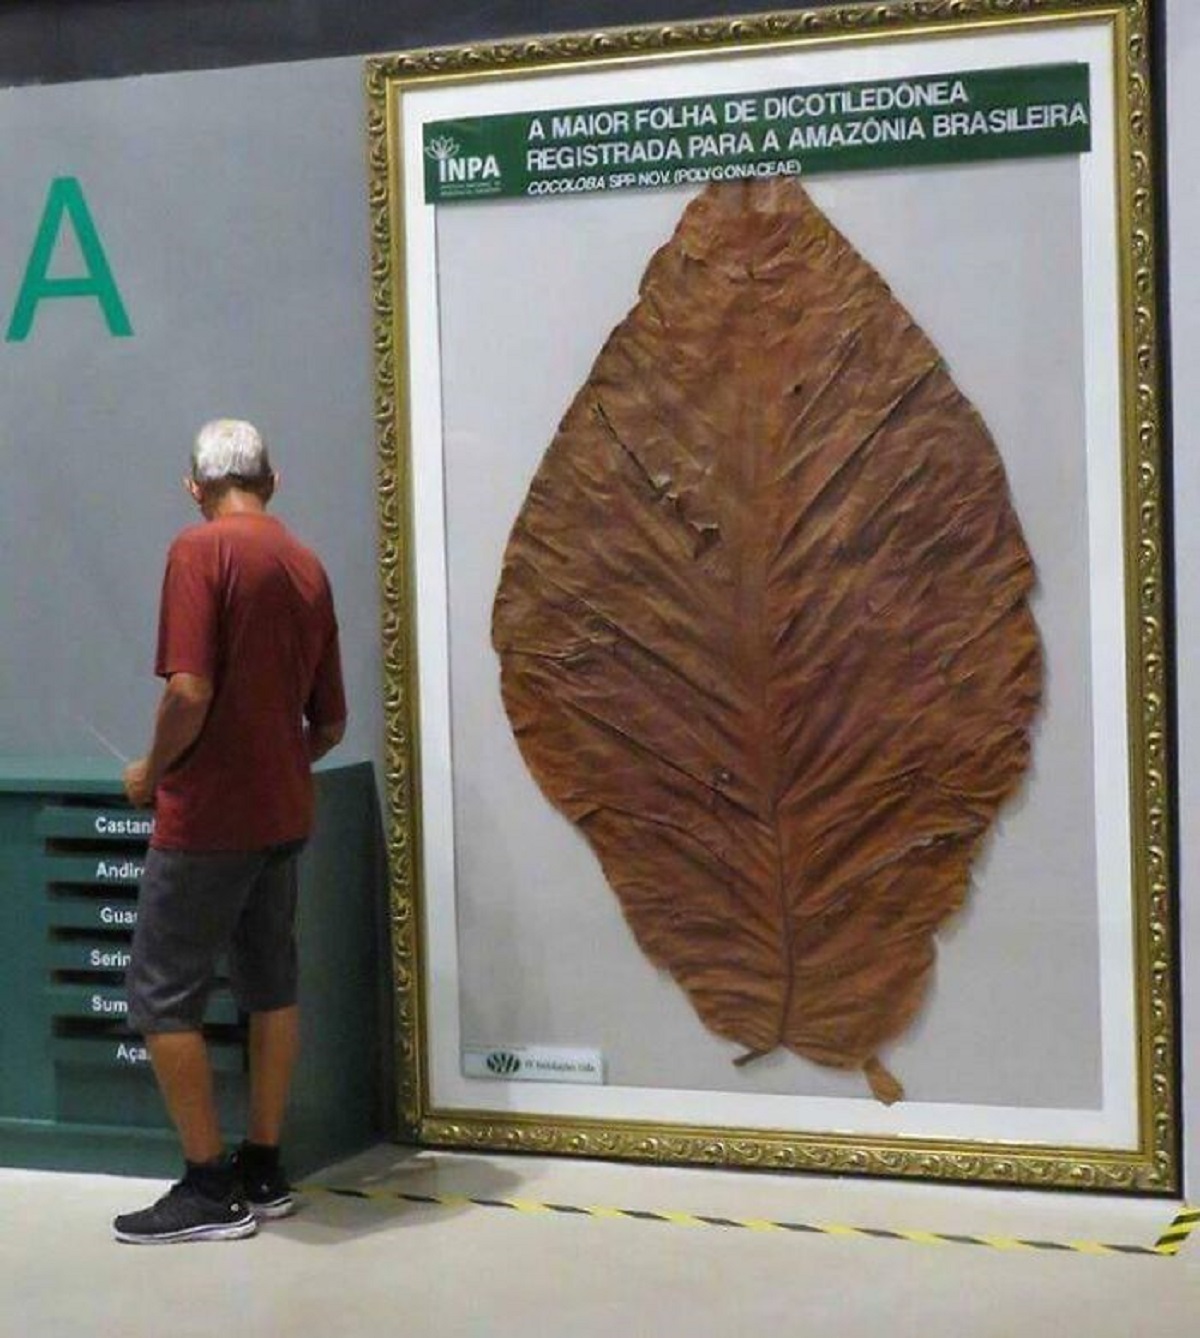 biggest leaf ever found